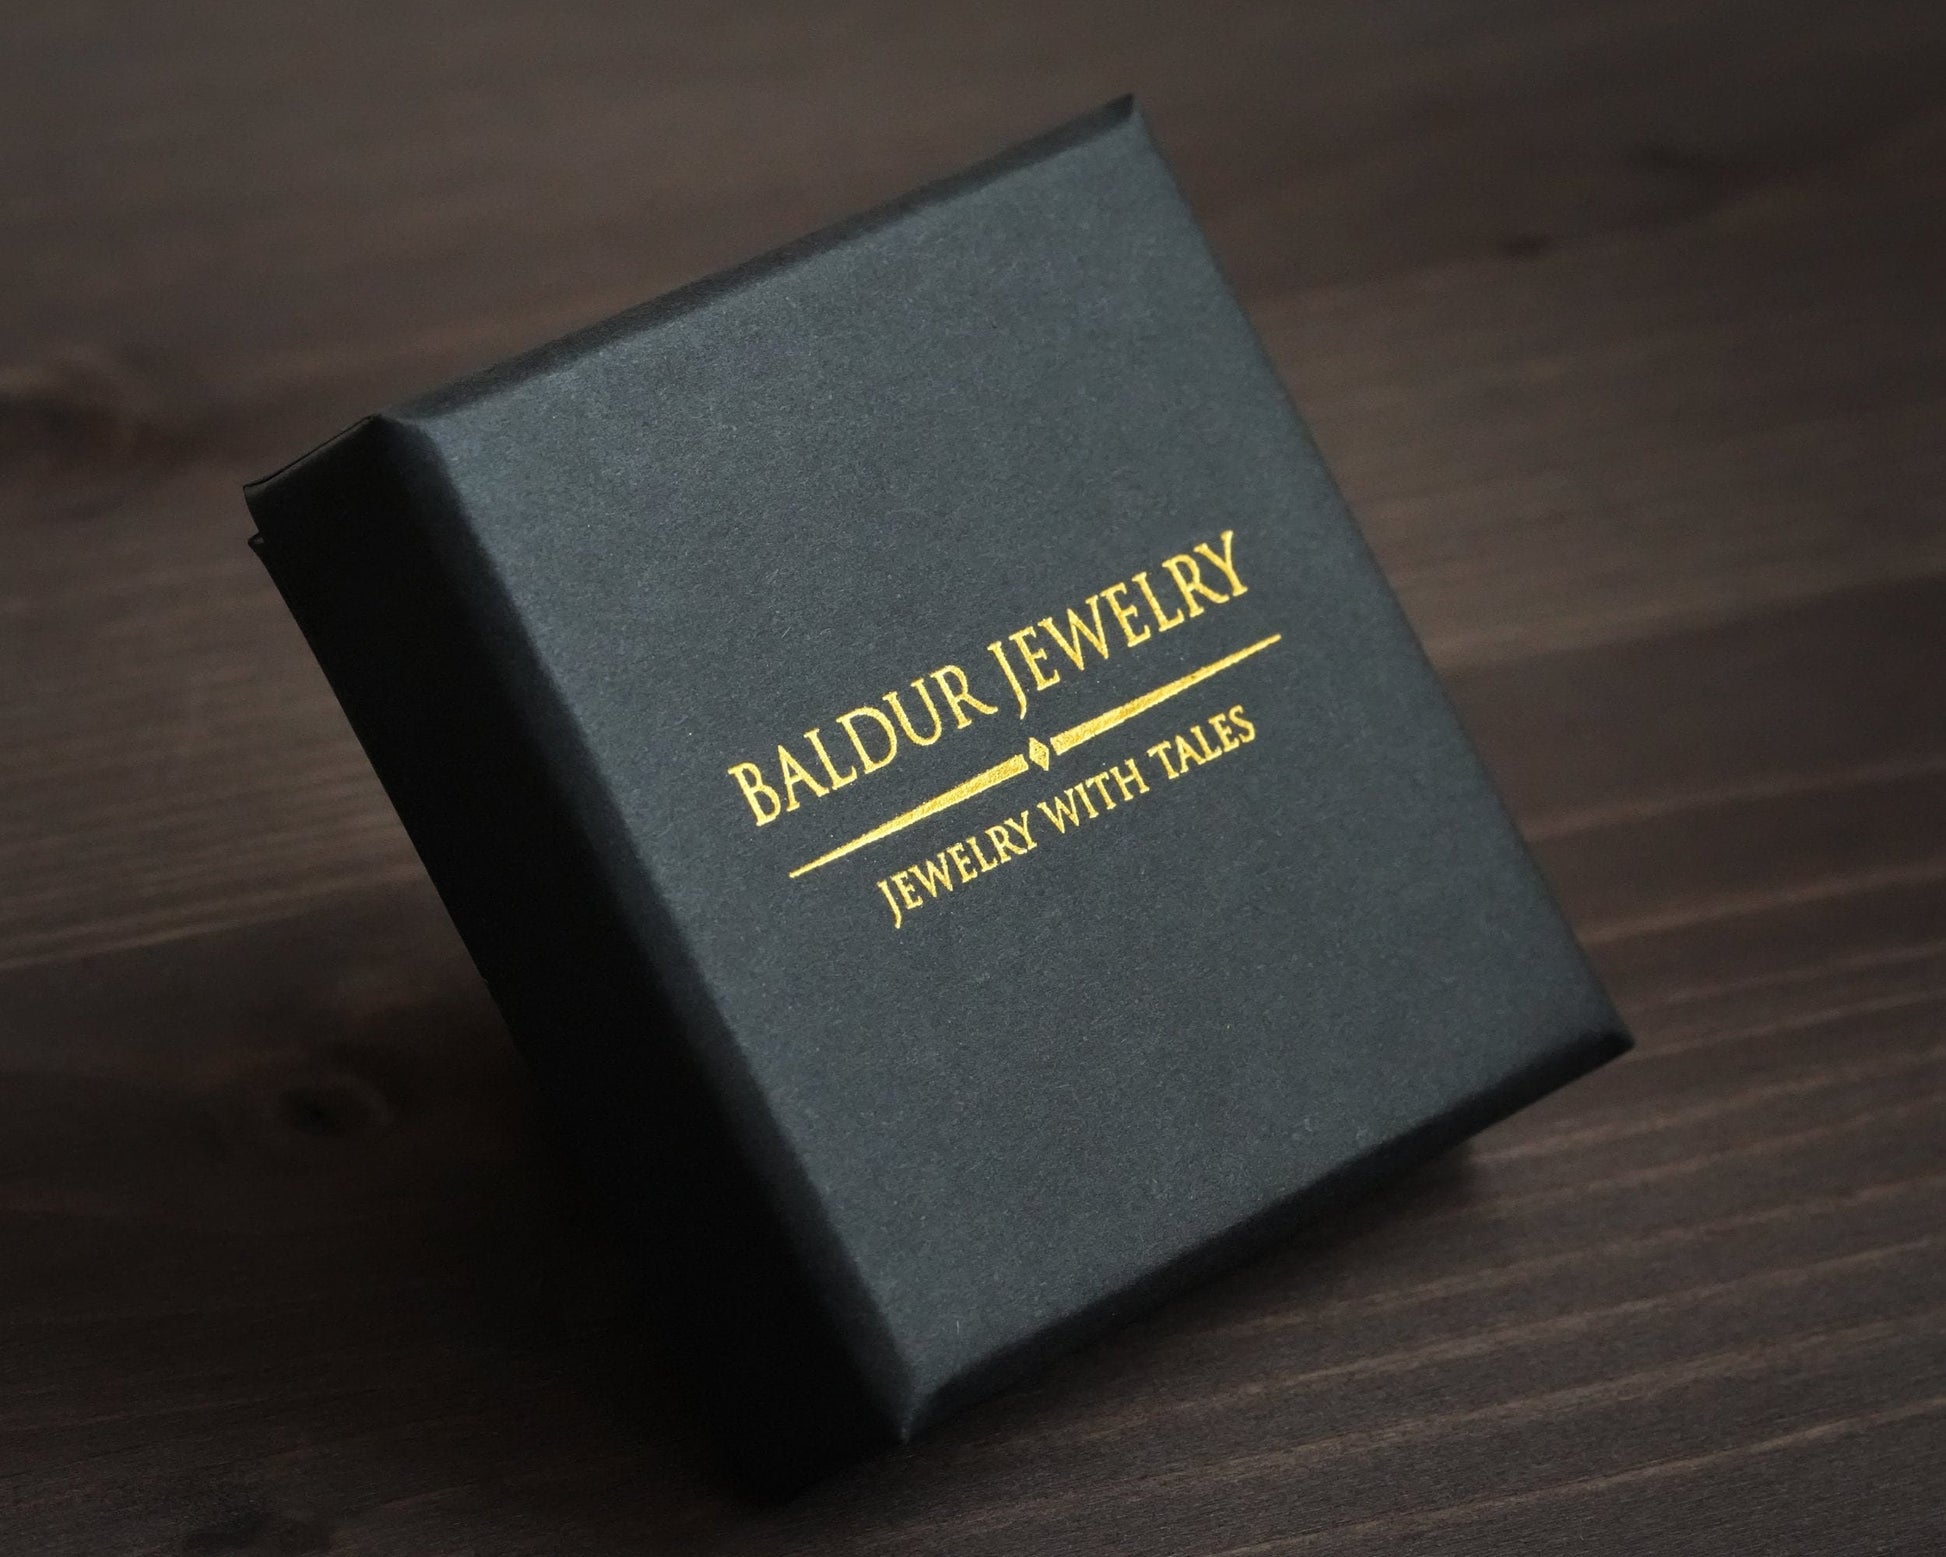 Gift package - Baldur Jewelry